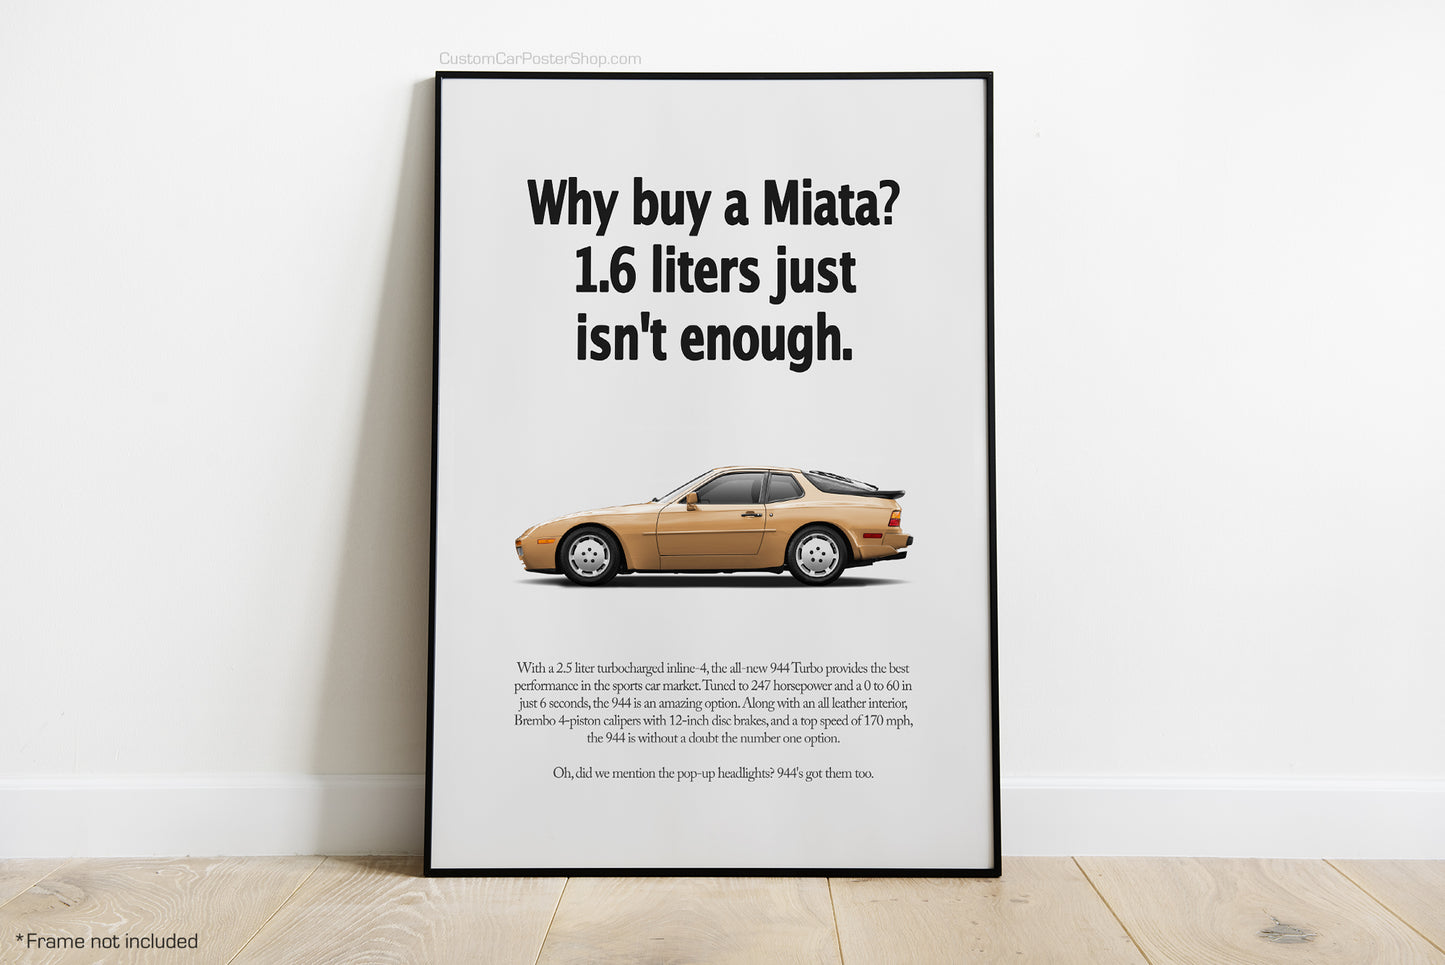 Porsche 944 Turbo Vintage Porsche Ads - Why Buy a Miata?